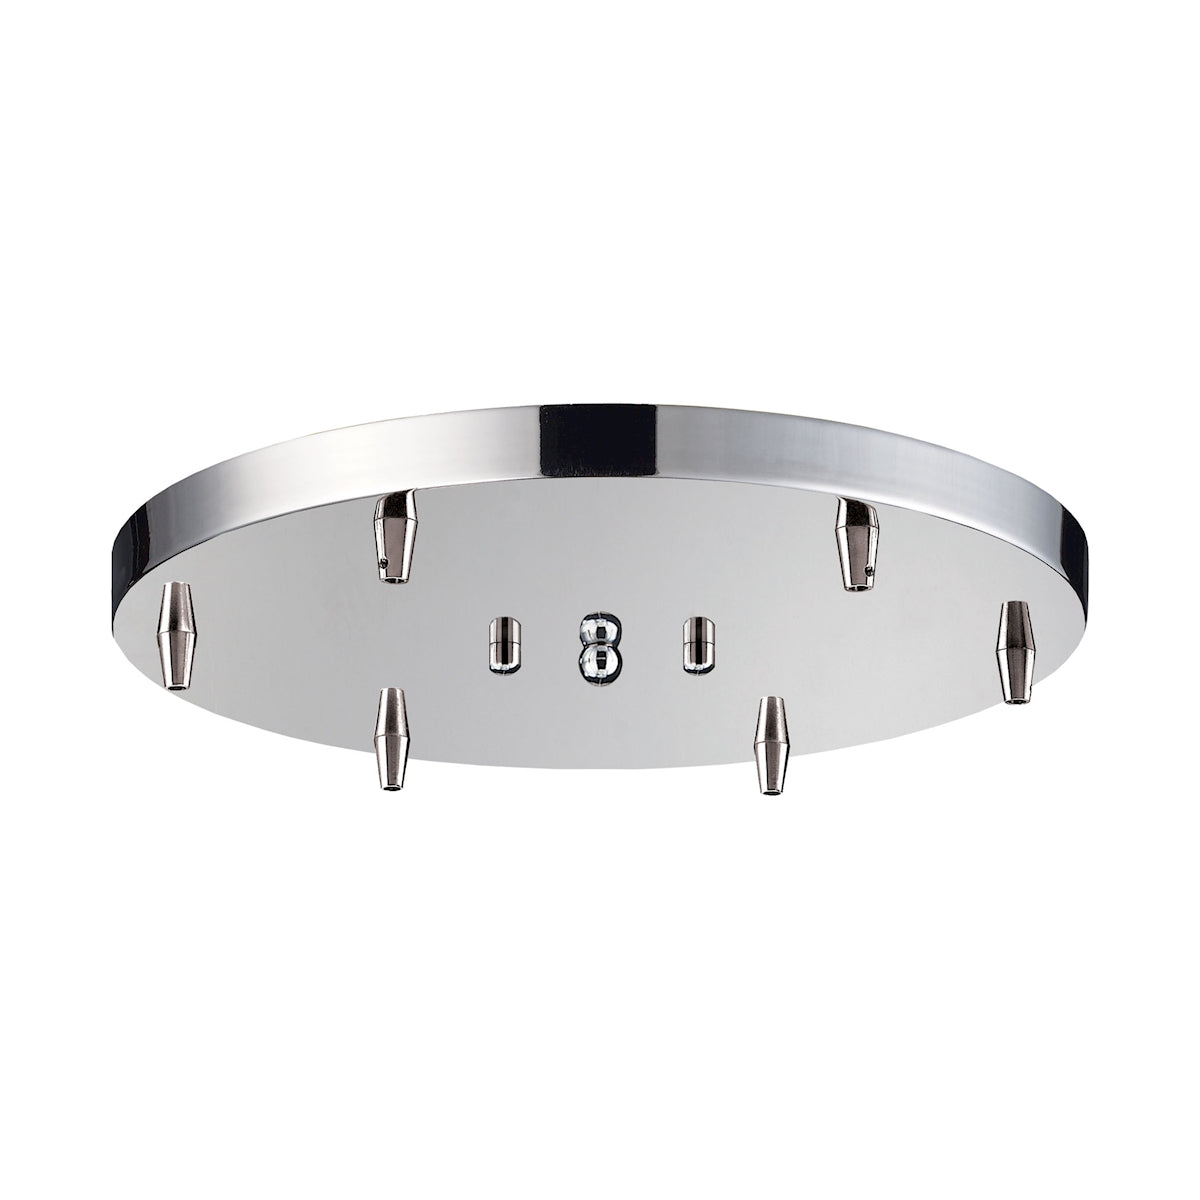 ELK Lighting 6R-CHR Illuminare Accessories Round Pan for 6 Lights in Chrome